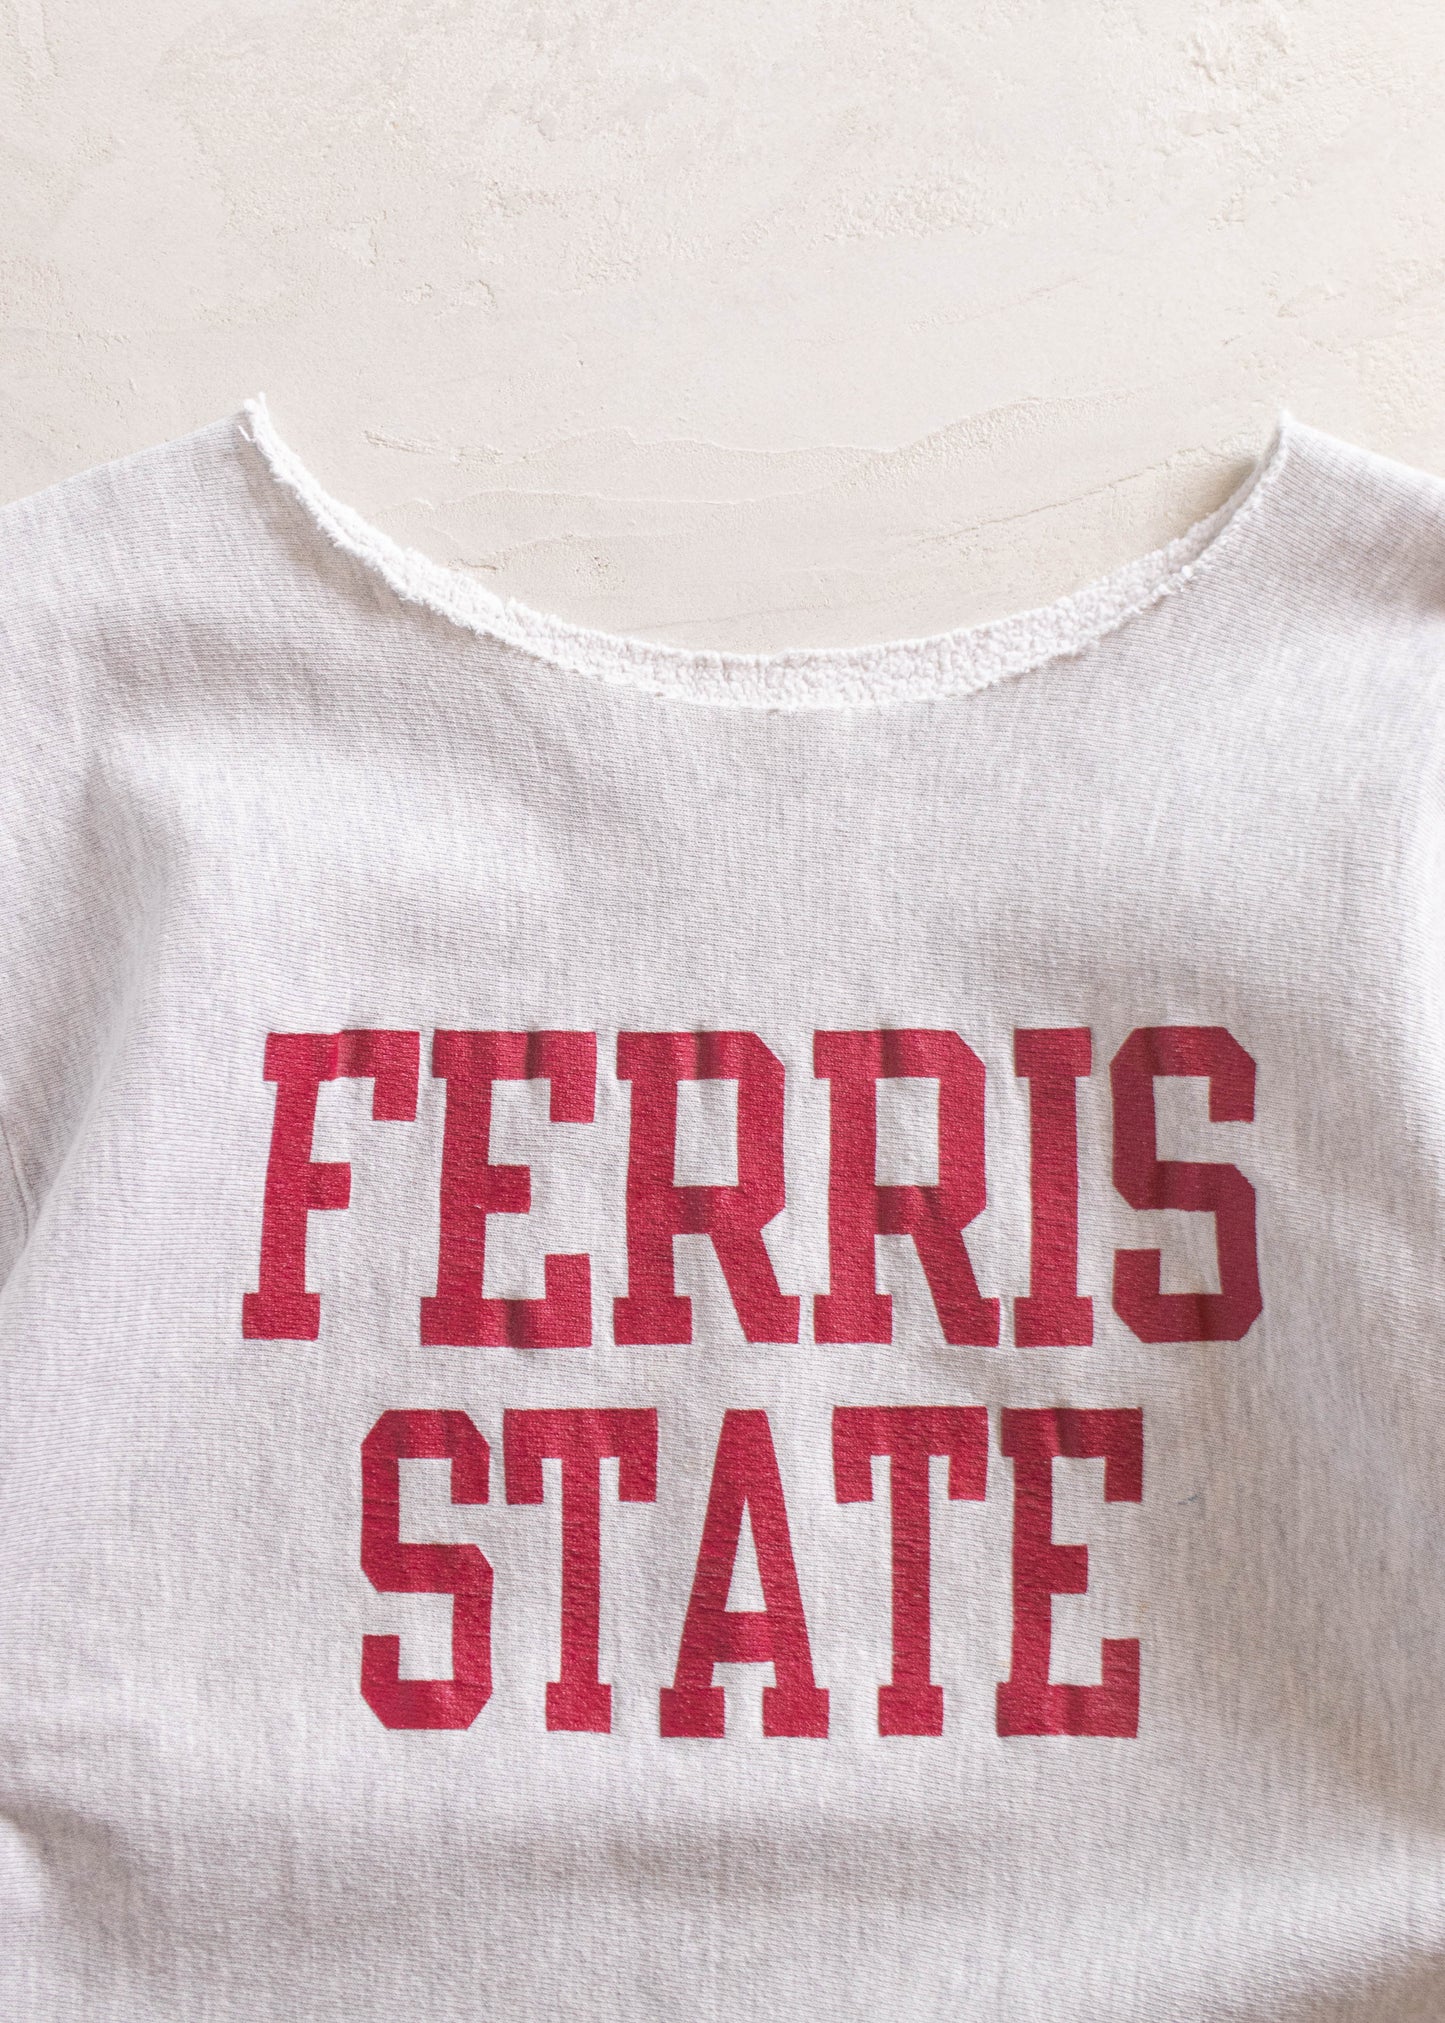 1980s Champion Reverse Weave Ferris State Sweatshirt Size S/M